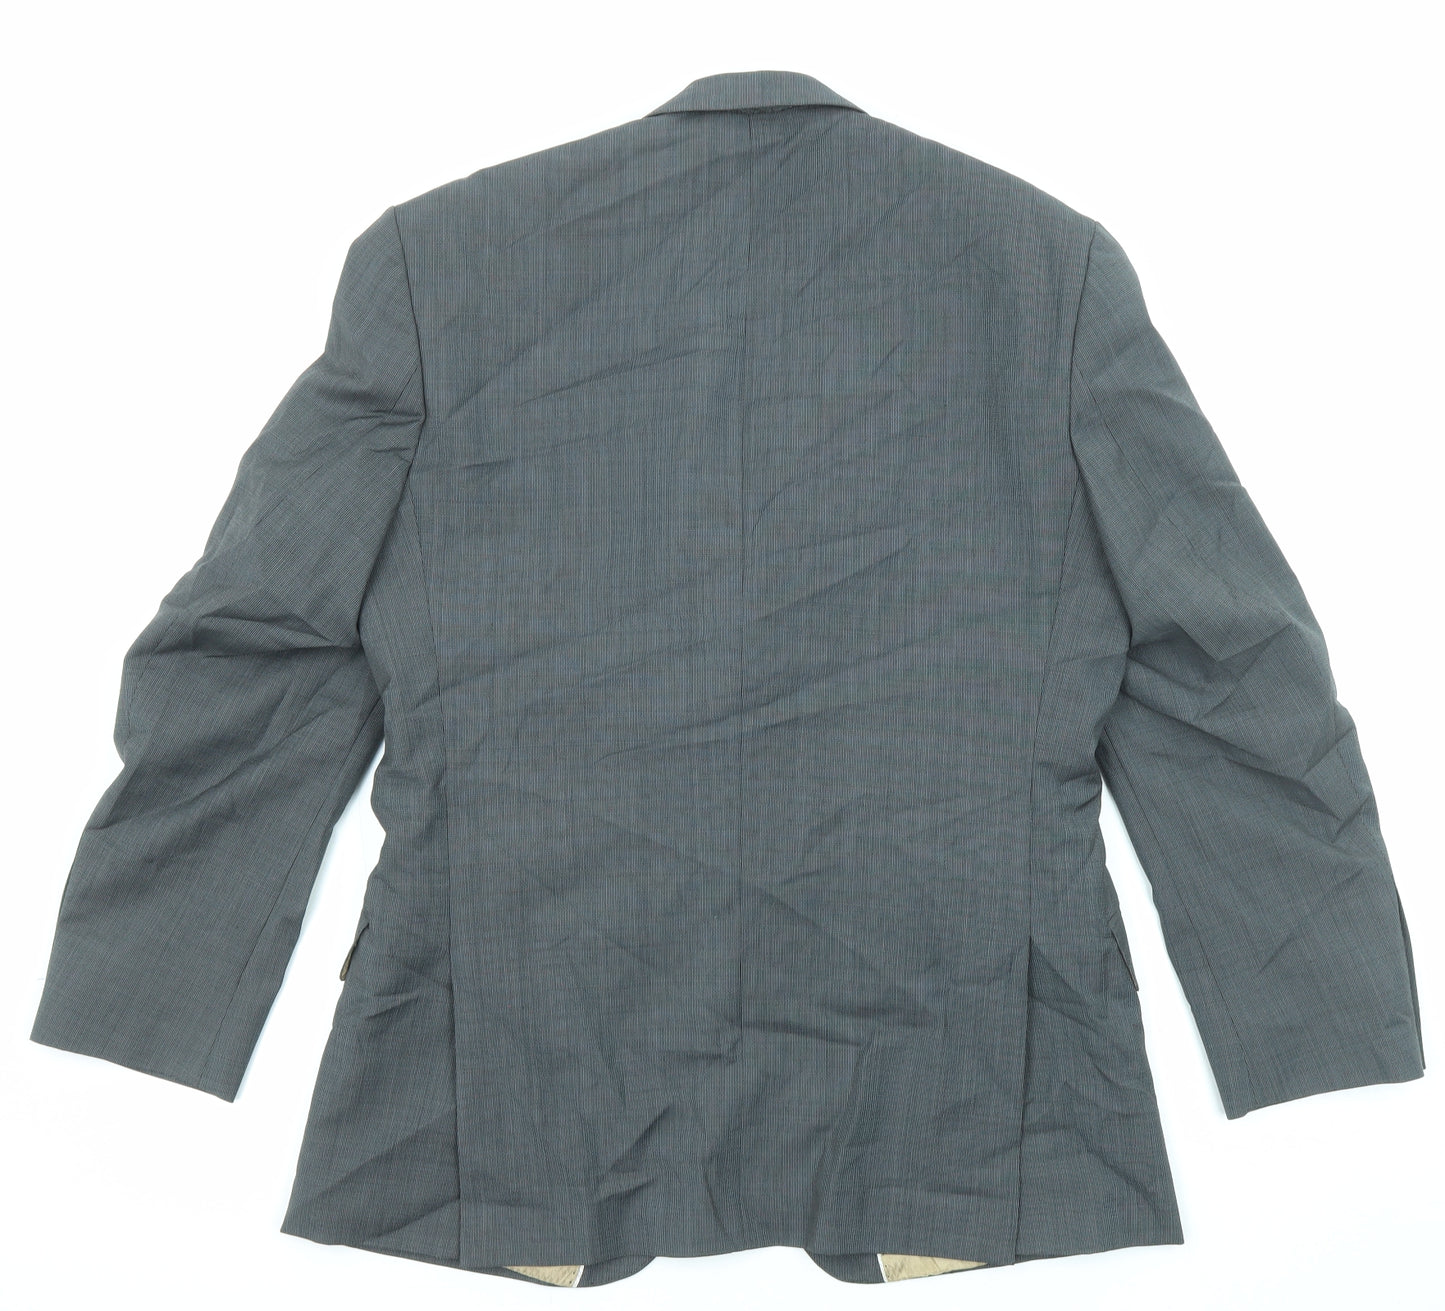 Racing Green Mens Grey Wool Jacket Suit Jacket Size 38 Regular